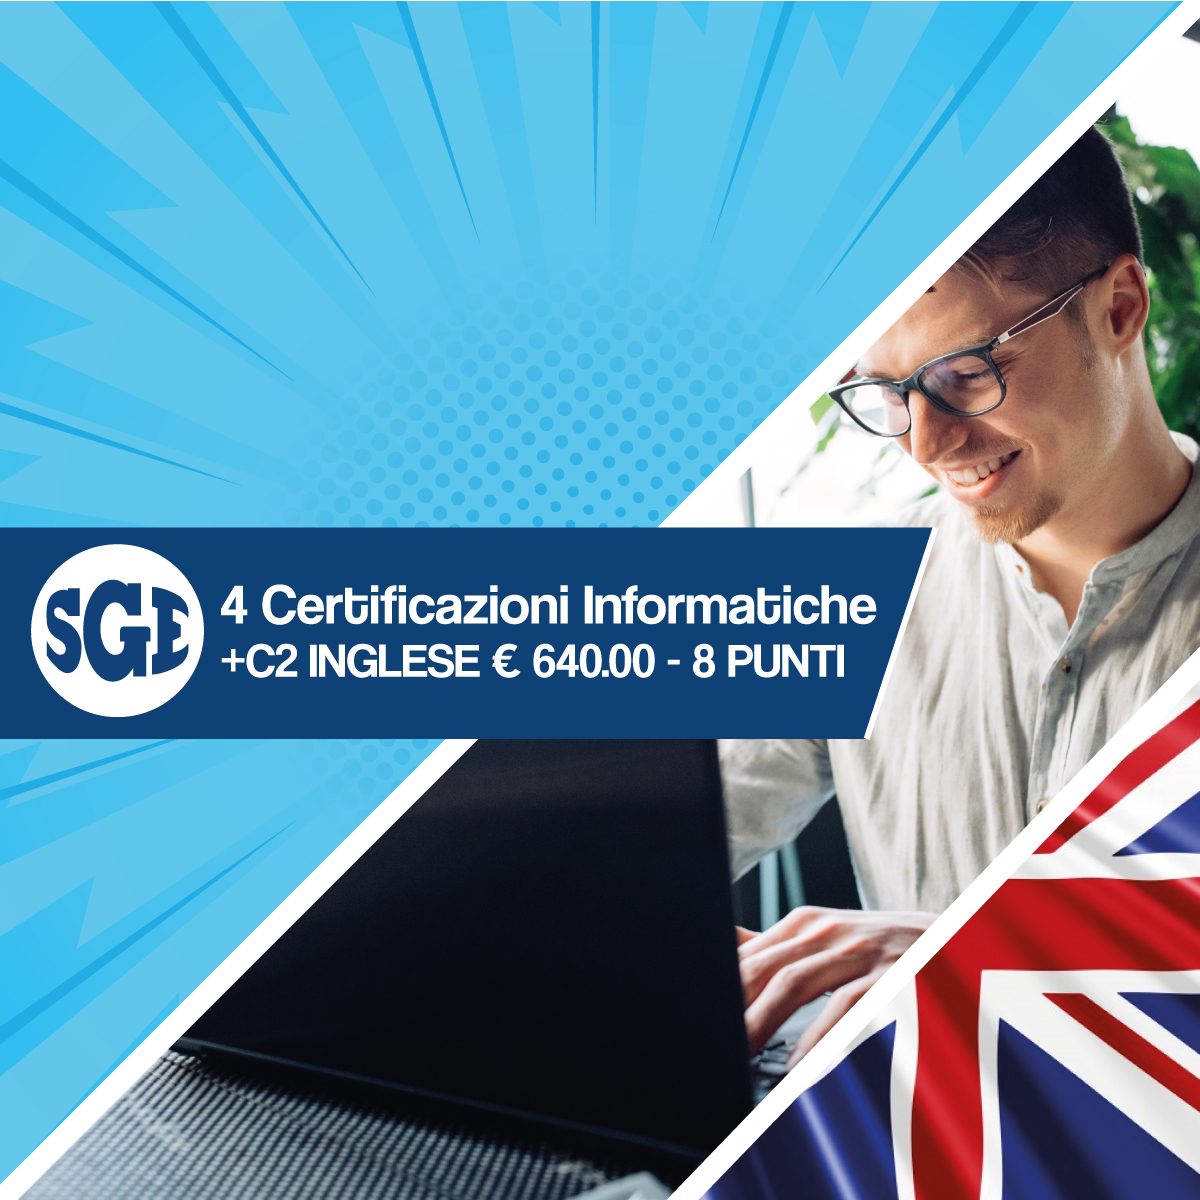 4 Certificazioni Informatiche € 399.00 - 2 PUNTI